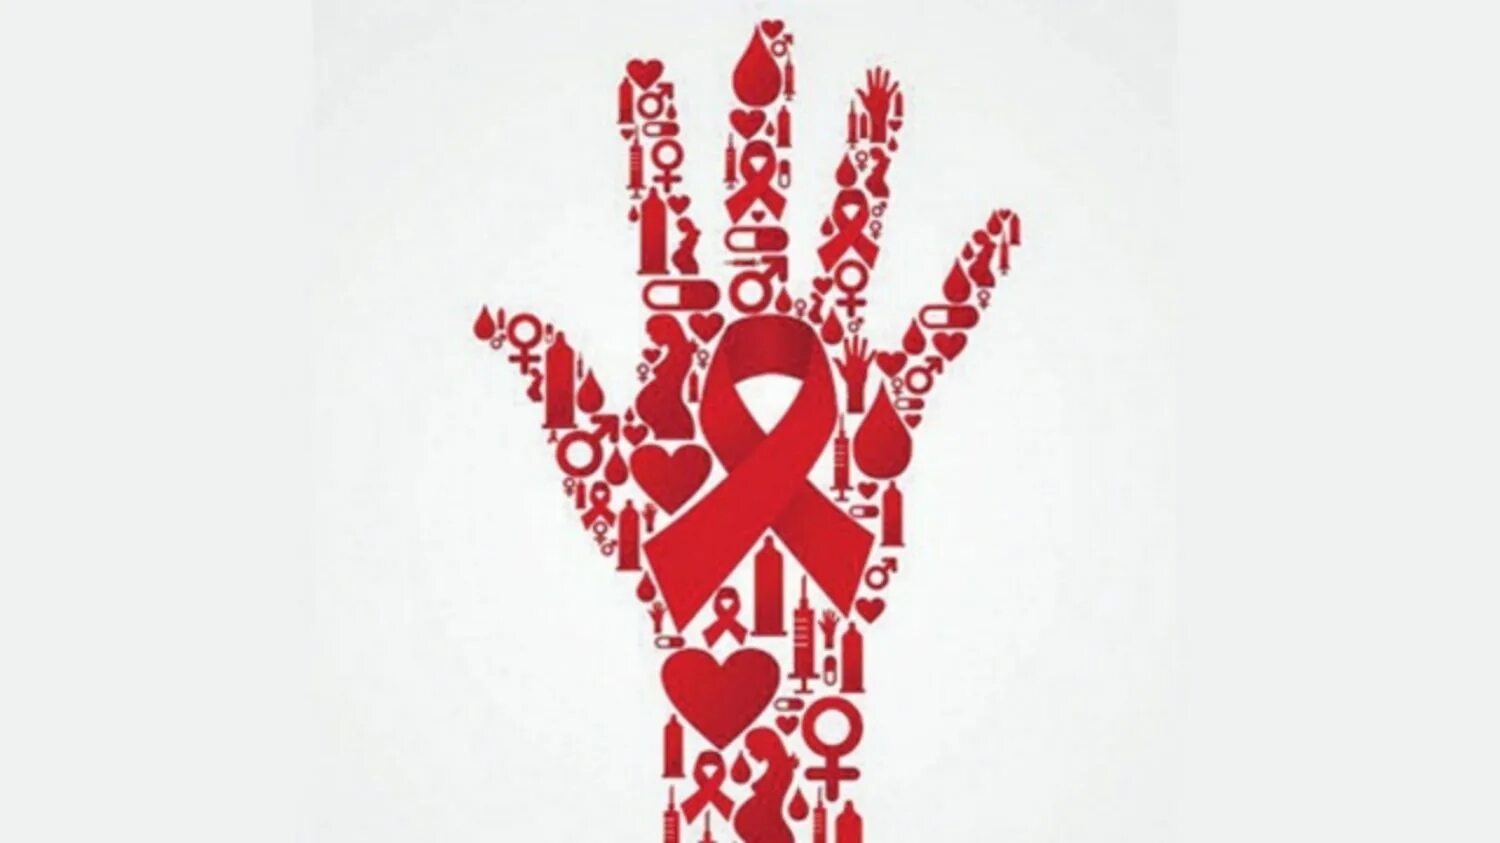 Фоны спид. Фон против СПИДА. Фоновый рисунок на тему ВИЧ СПИД. ВИЧ на прозрачном фоне. Логотип ВИЧ инфекции.